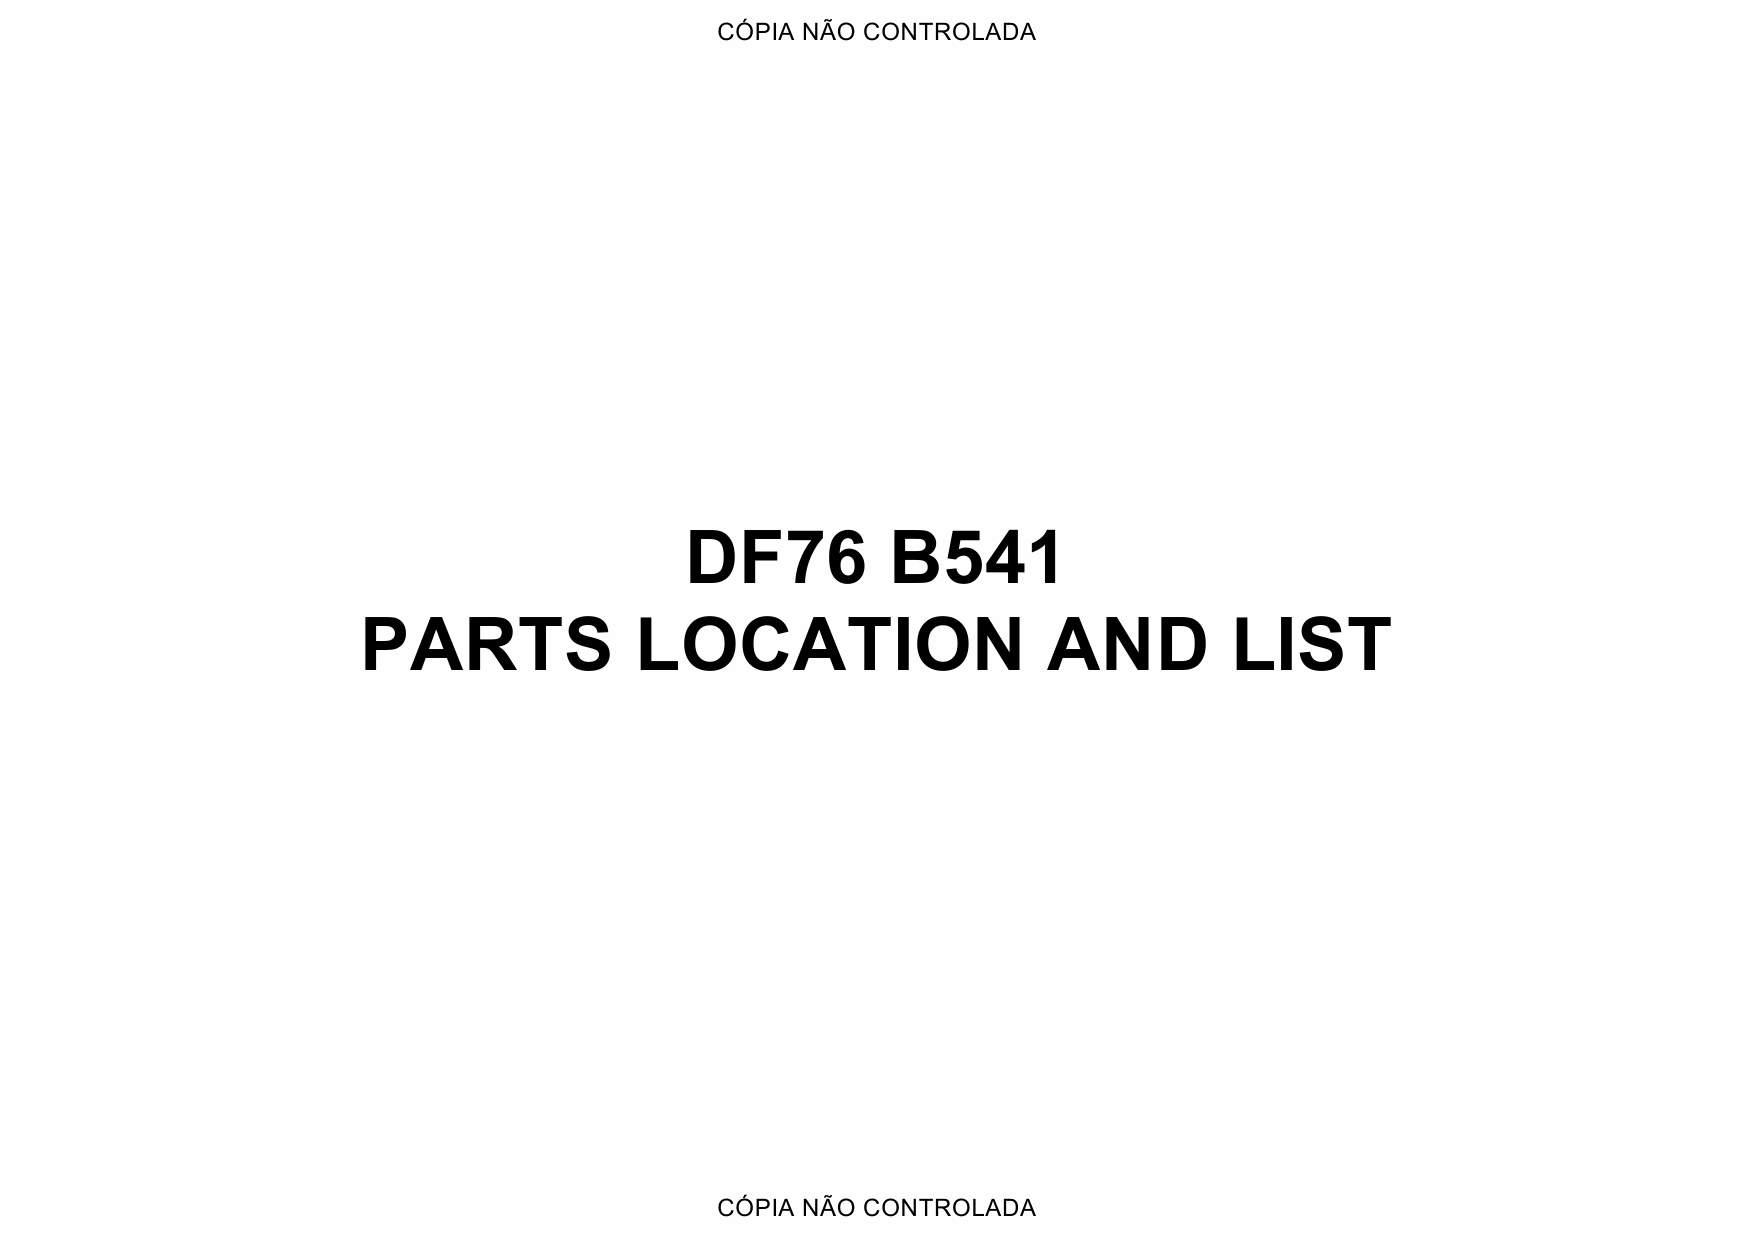 RICOH Options DF76 B541 Parts Catalog PDF download-1